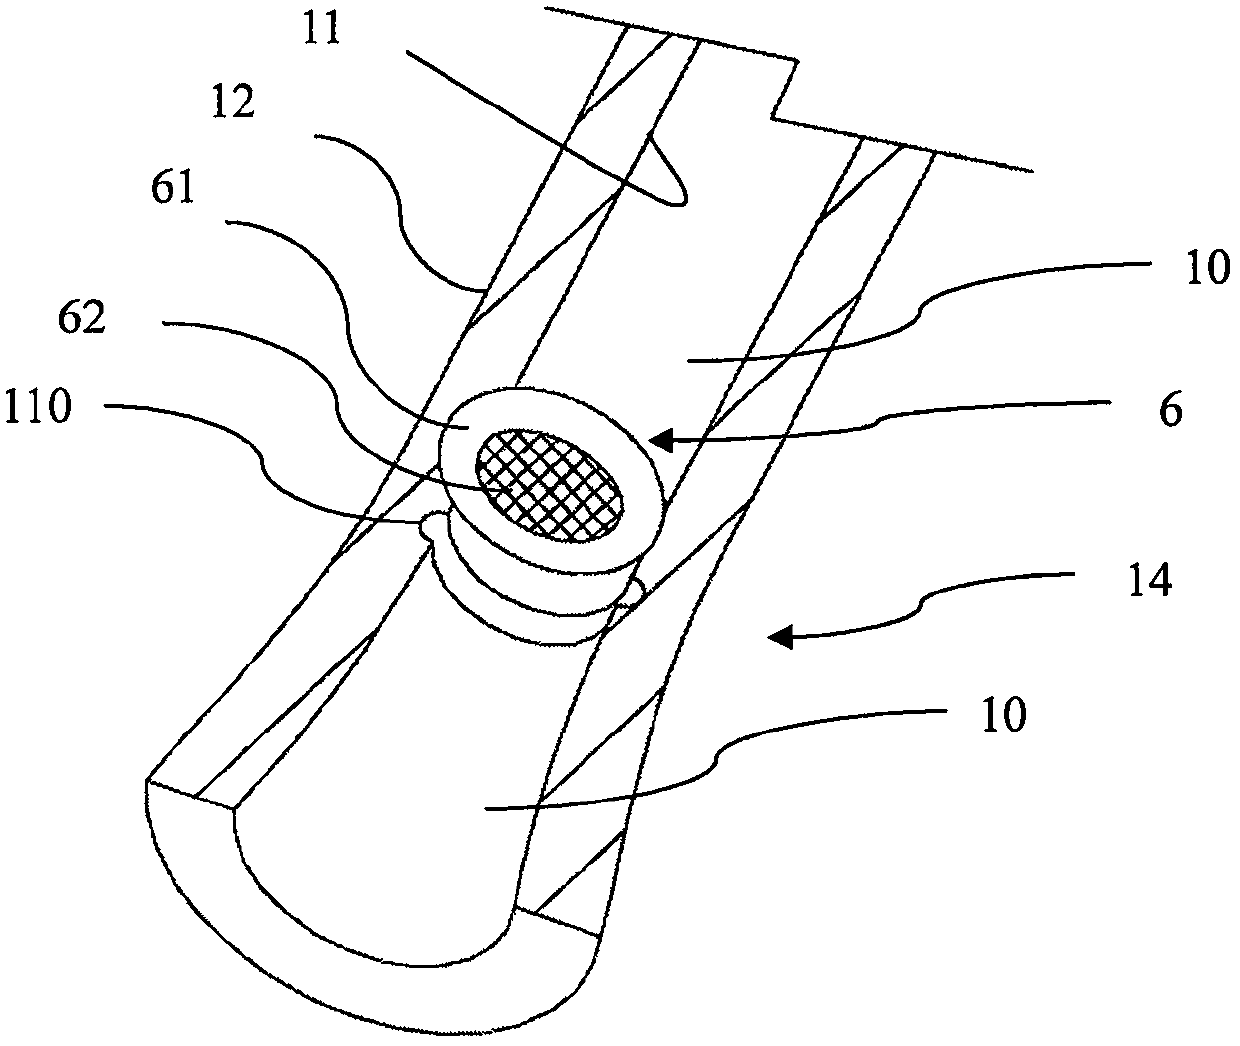 A stop-flow catheter